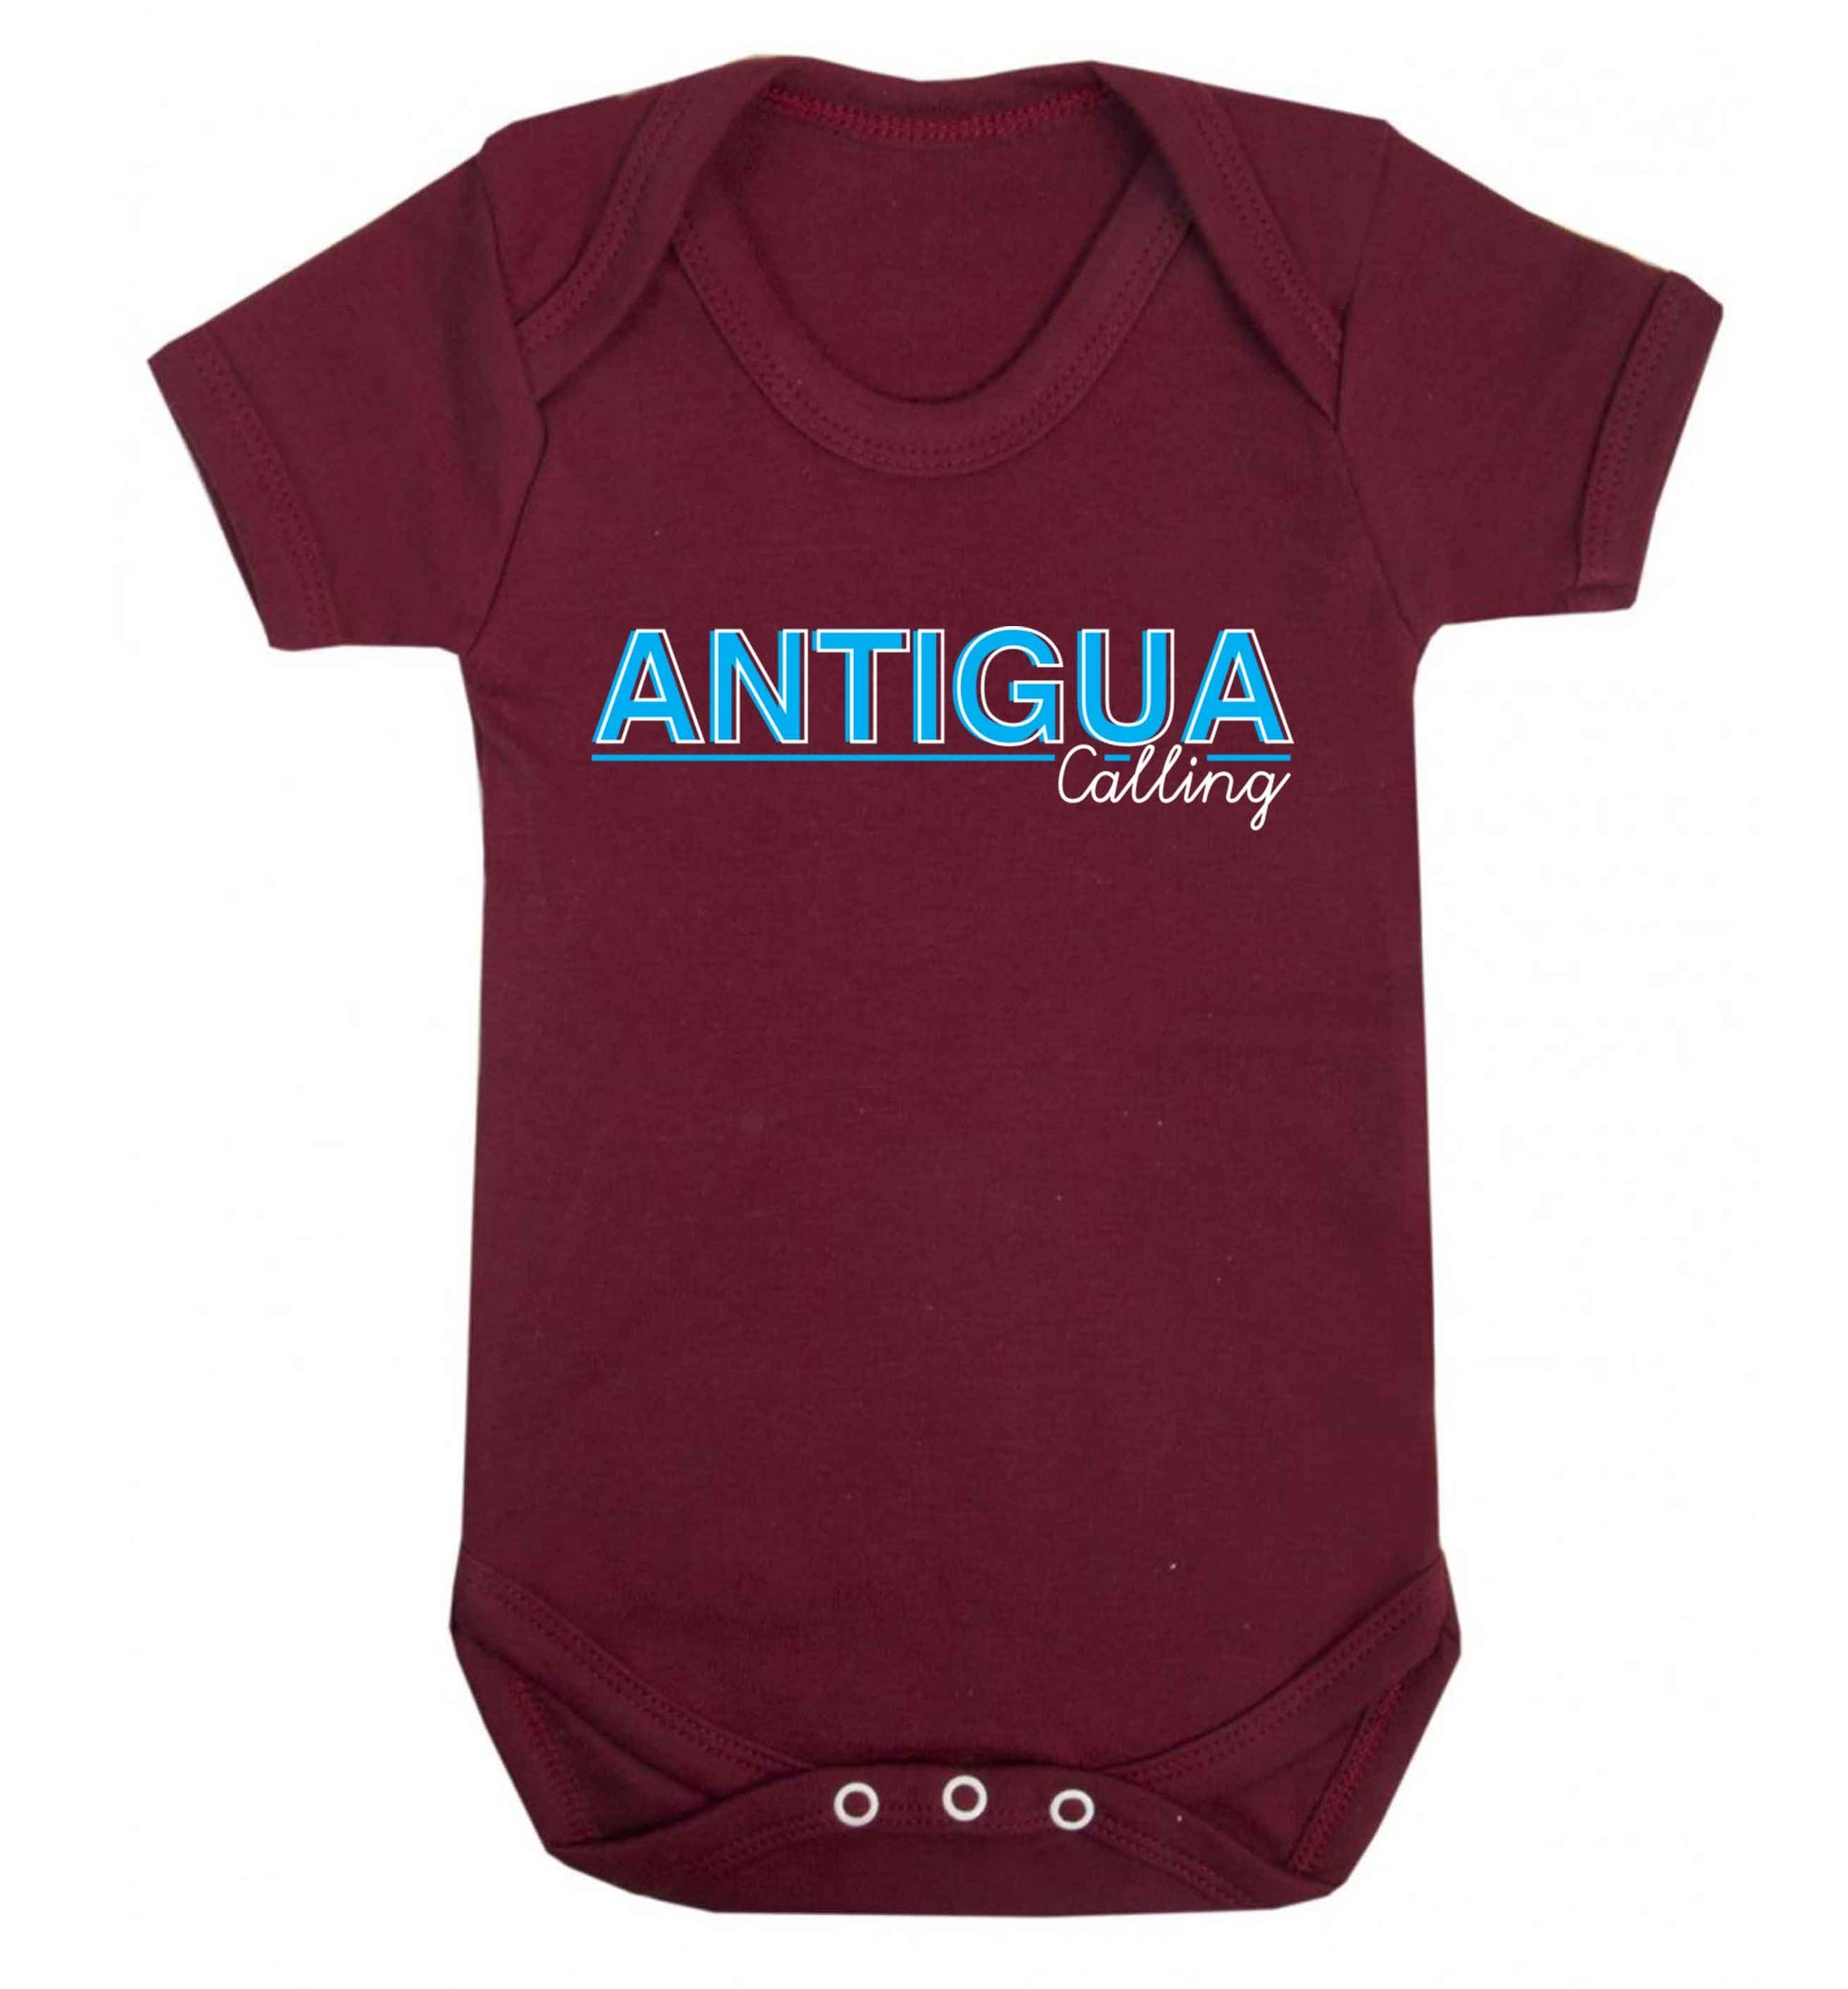 Antigua calling Baby Vest maroon 18-24 months